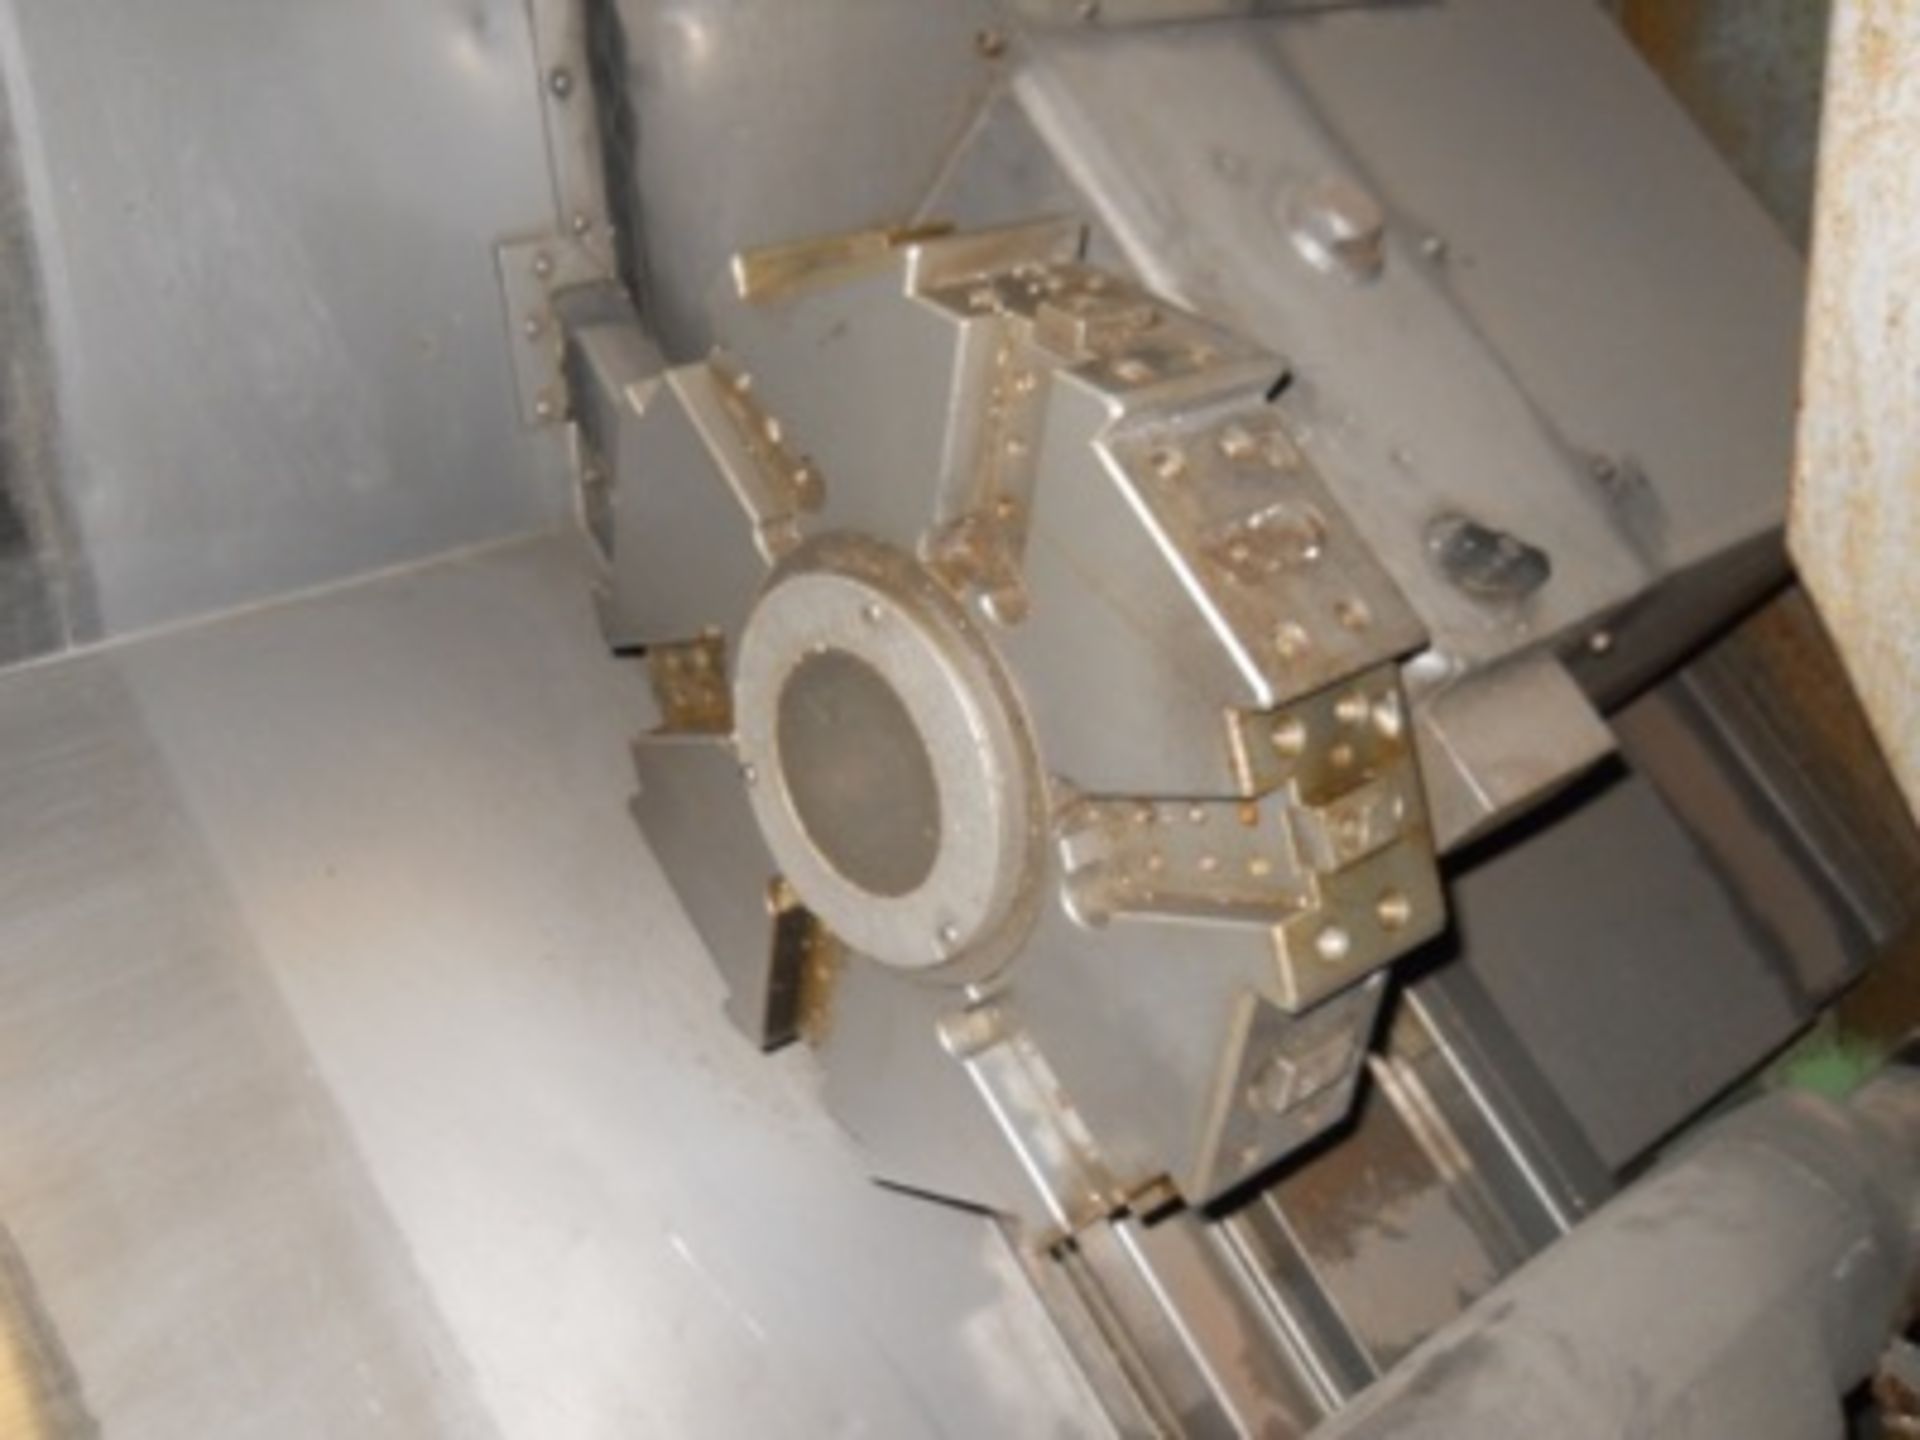 Mori Seiki mod. SL-15 CNC Turning Center w/ Fanuc MF-T4 CNC Controls, 3-Jaw Chuck, 6-Position - Image 2 of 6